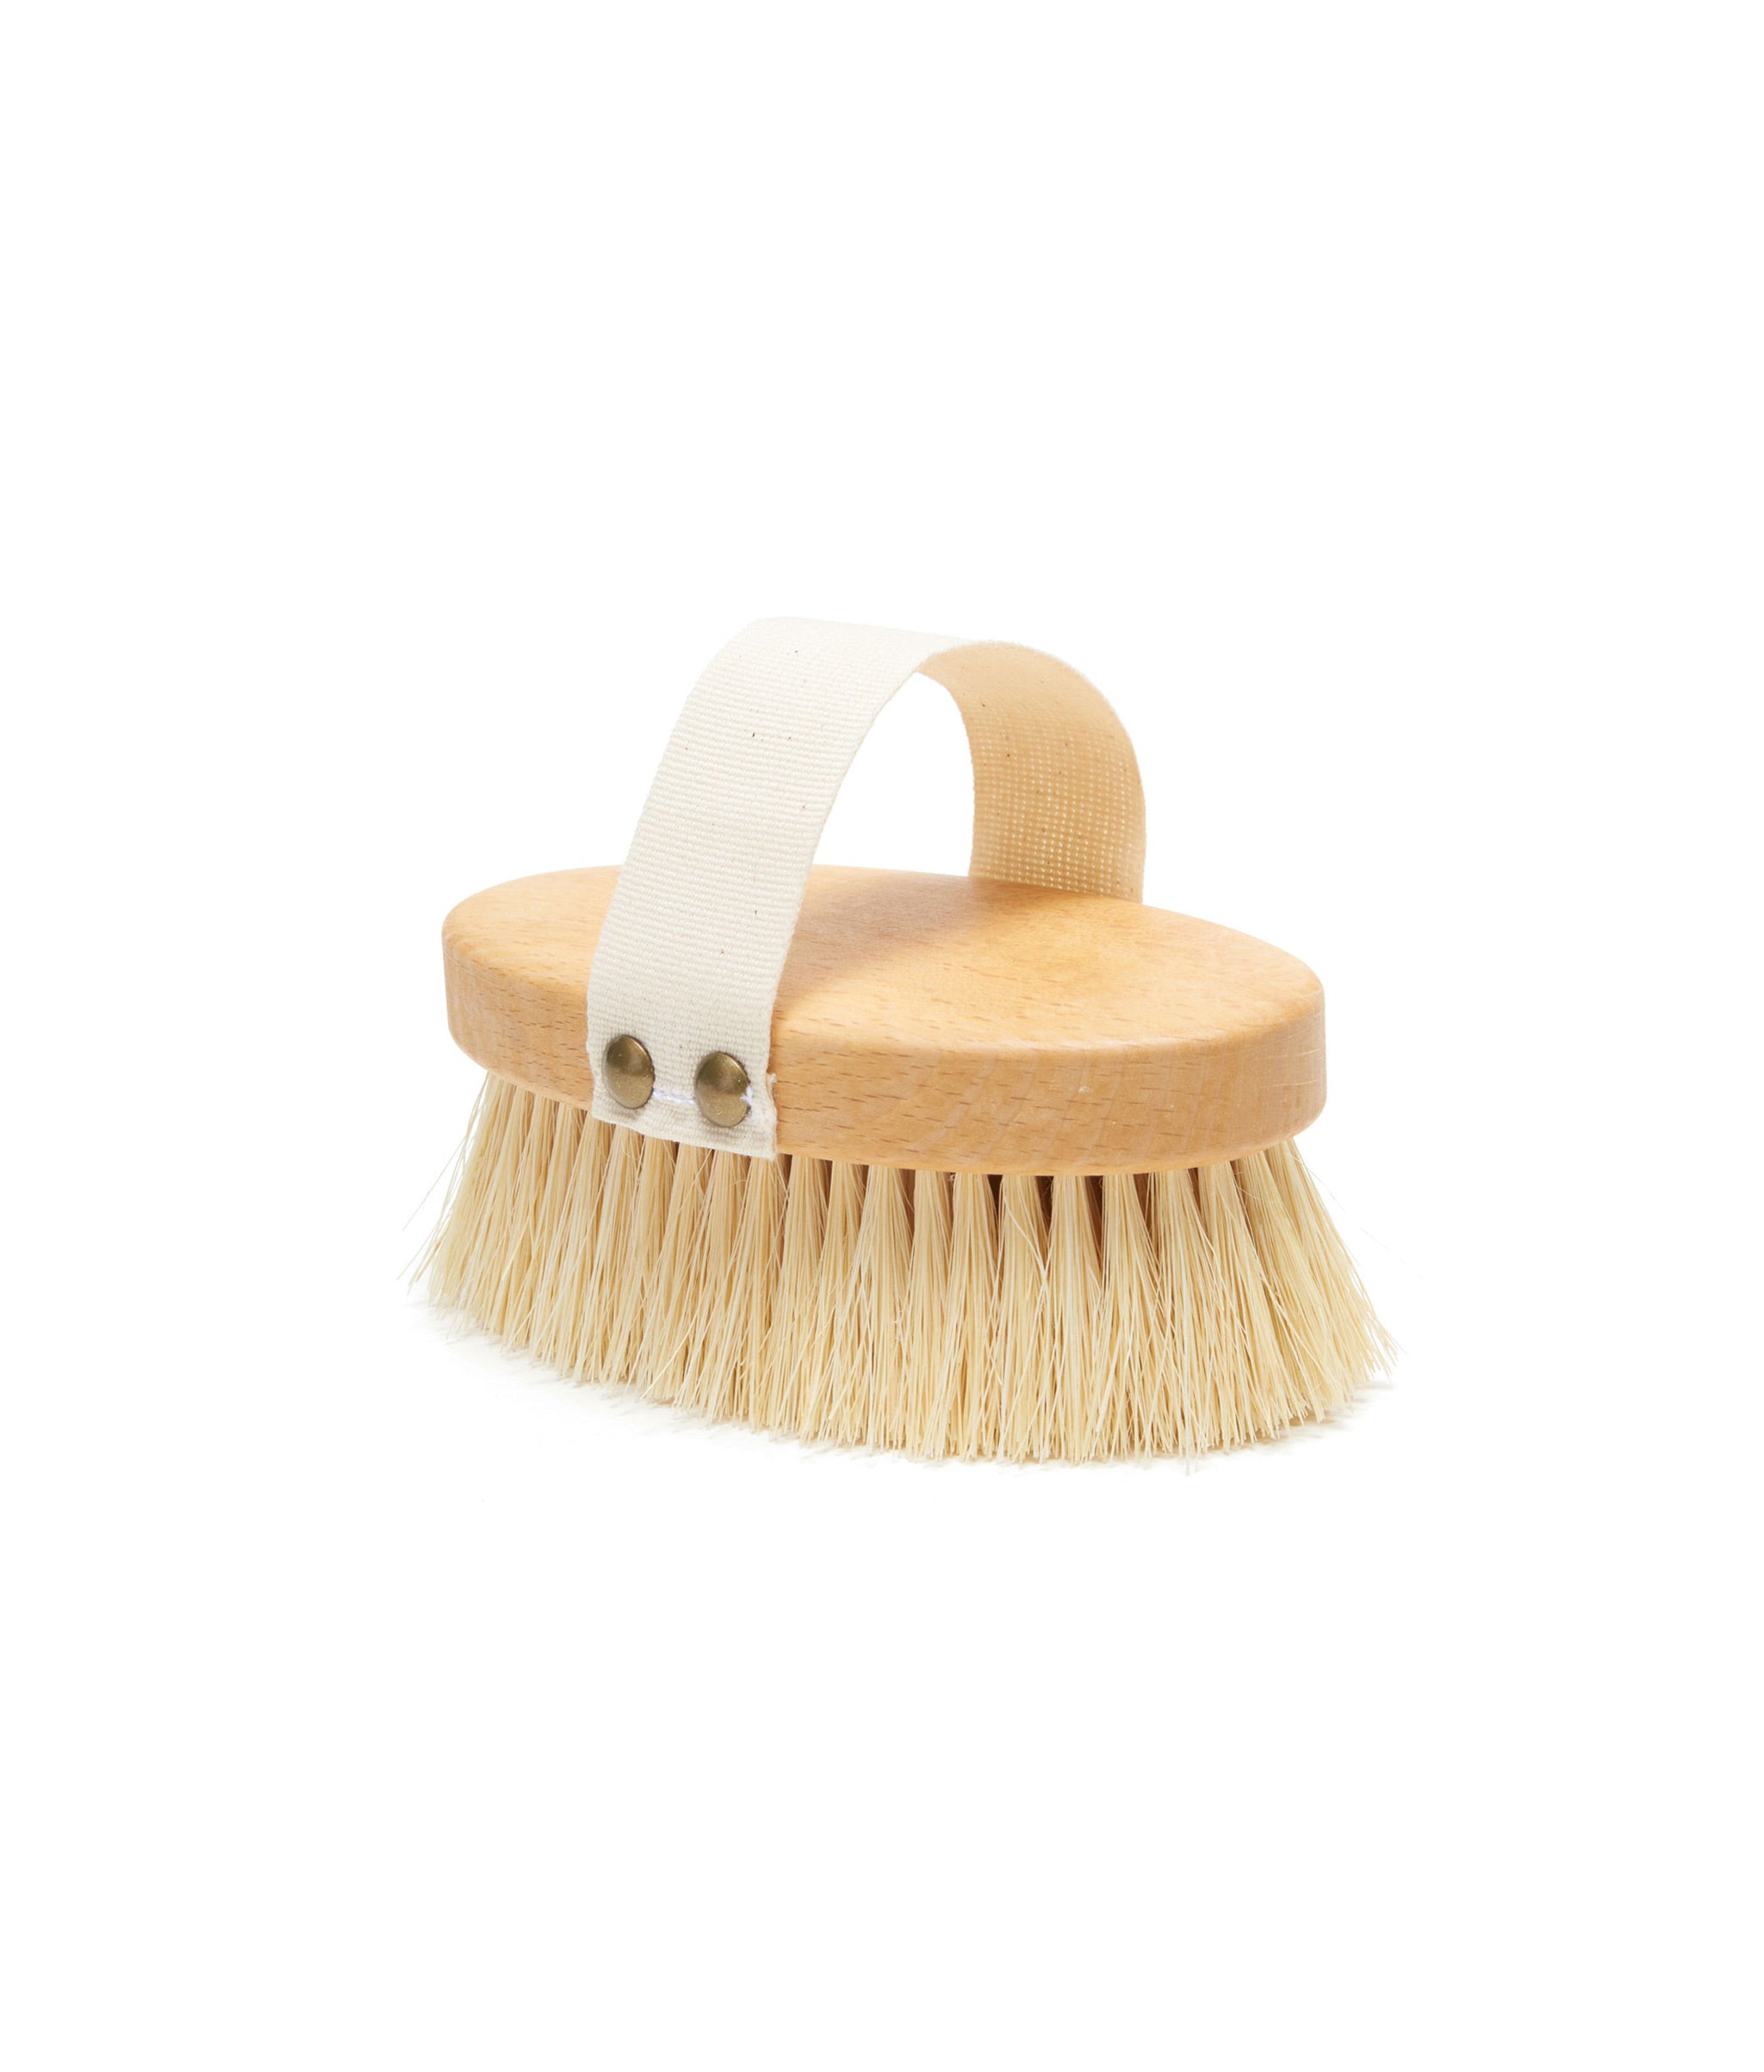 Massage Brush. Dry skin scrub brush with beech wood top, natural fiber bristles and white cotton belt.